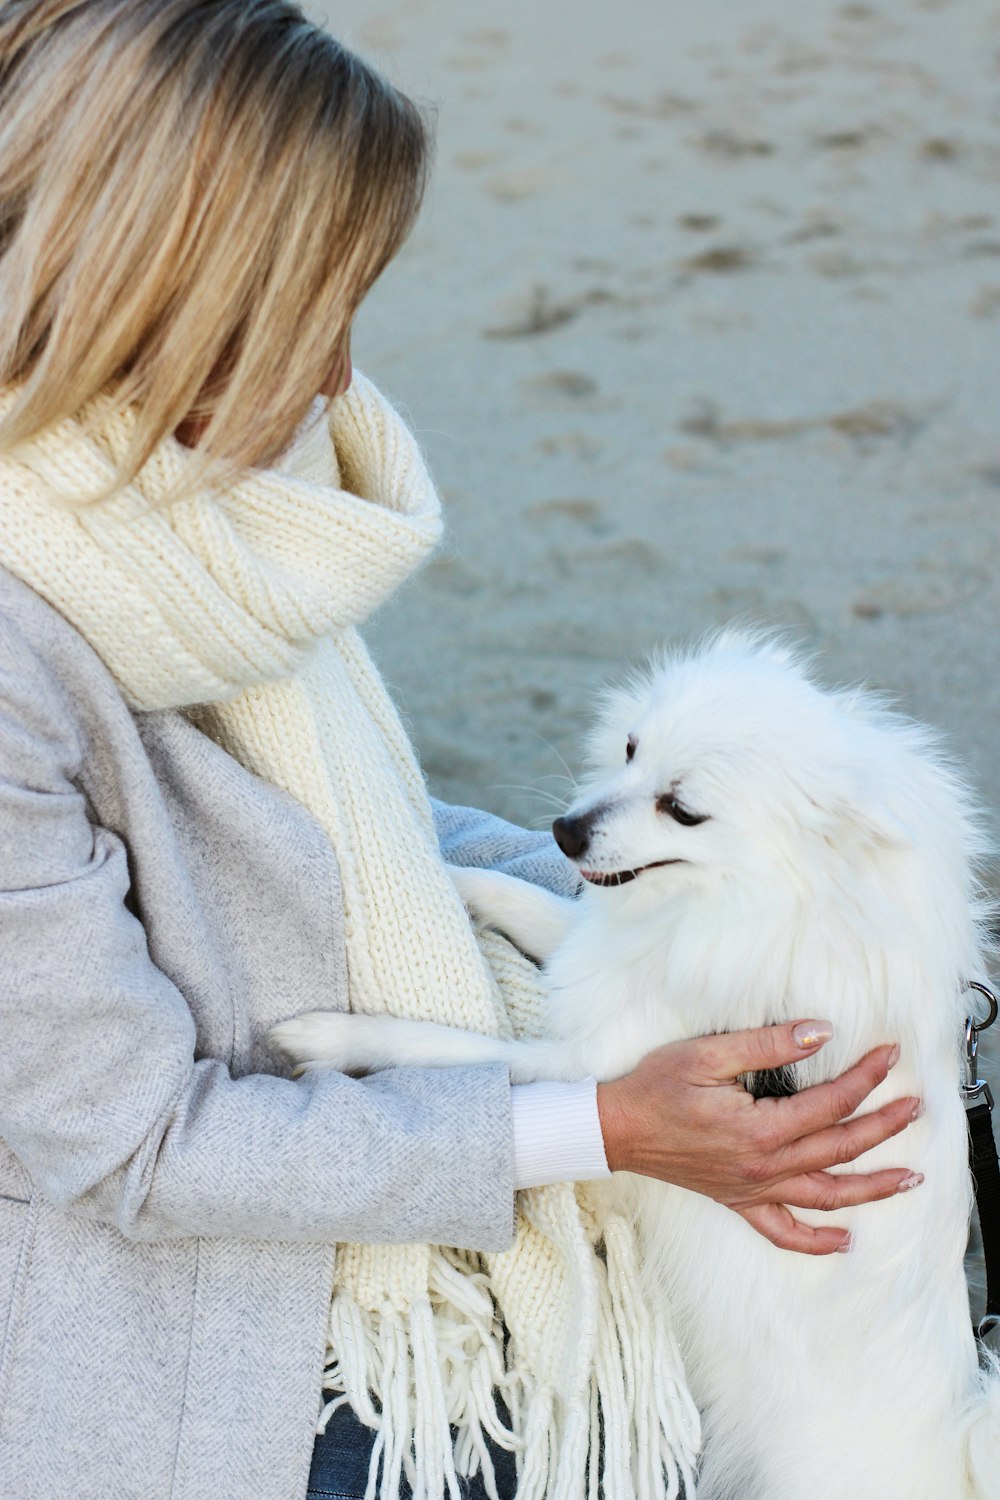 a woman holding a white dog on a beach